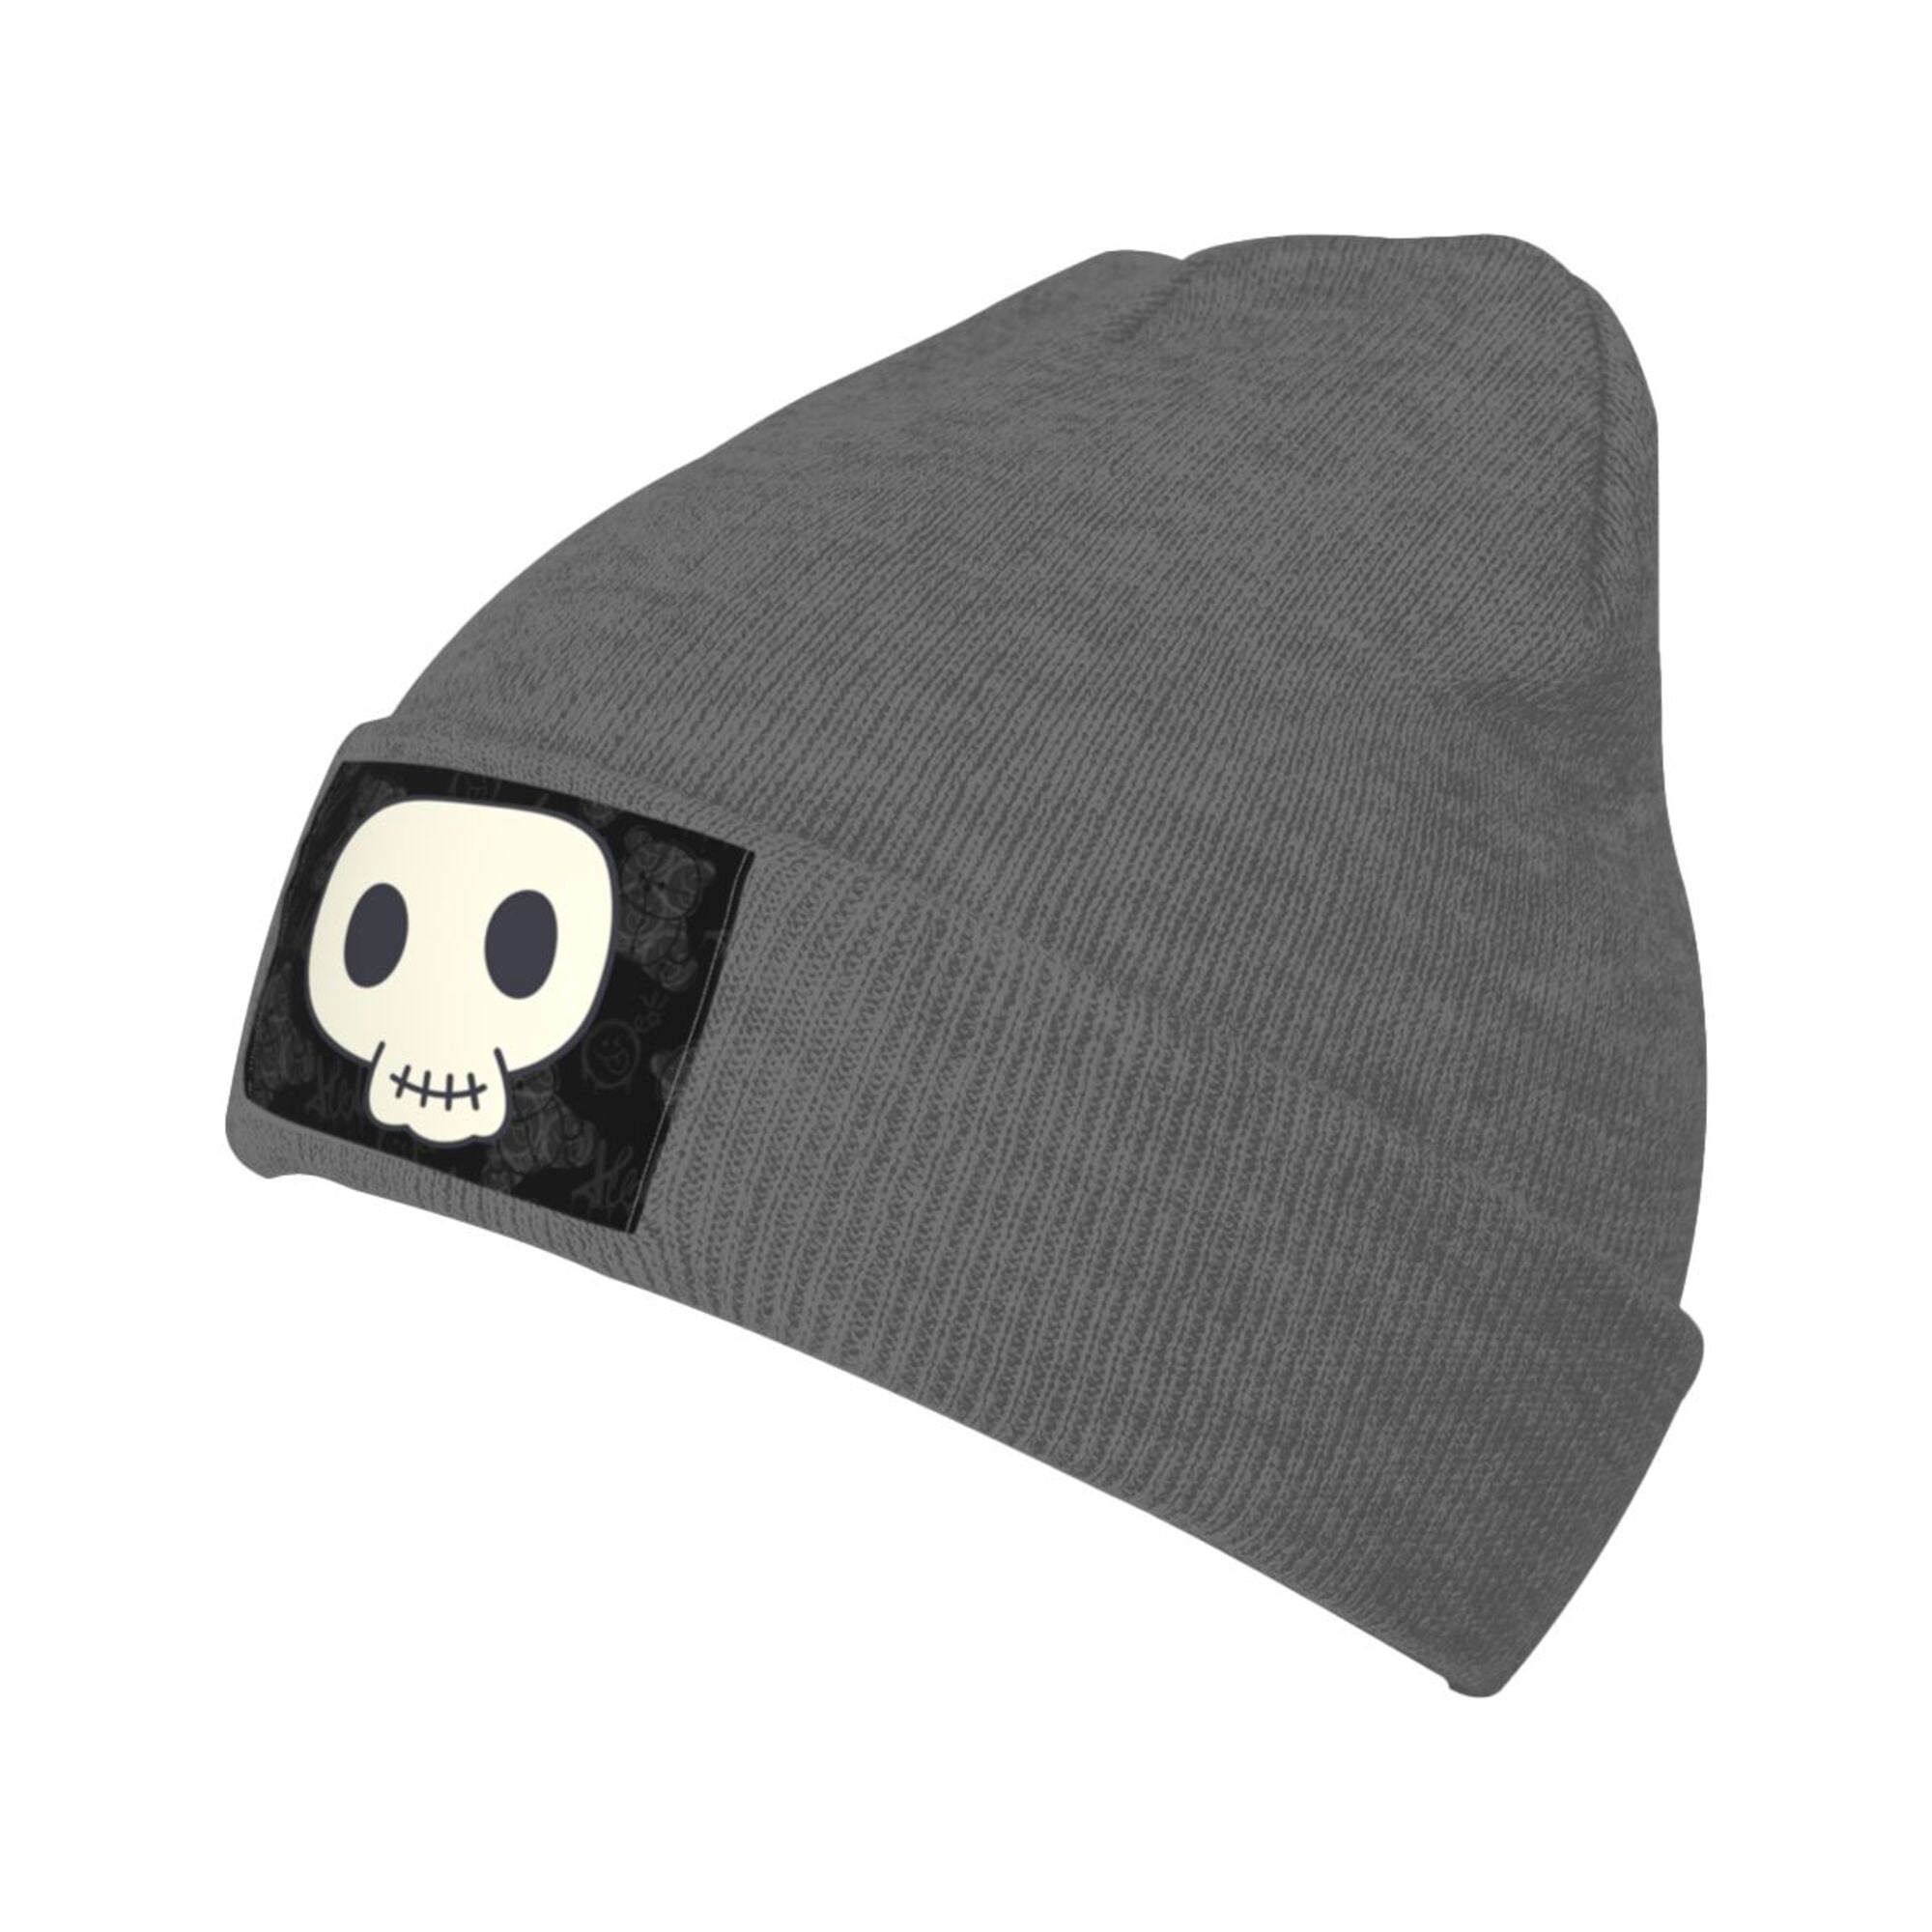 ZICANCN Knit Beanie Hat-Skull Winter Cap Soft Warm Classic Hats